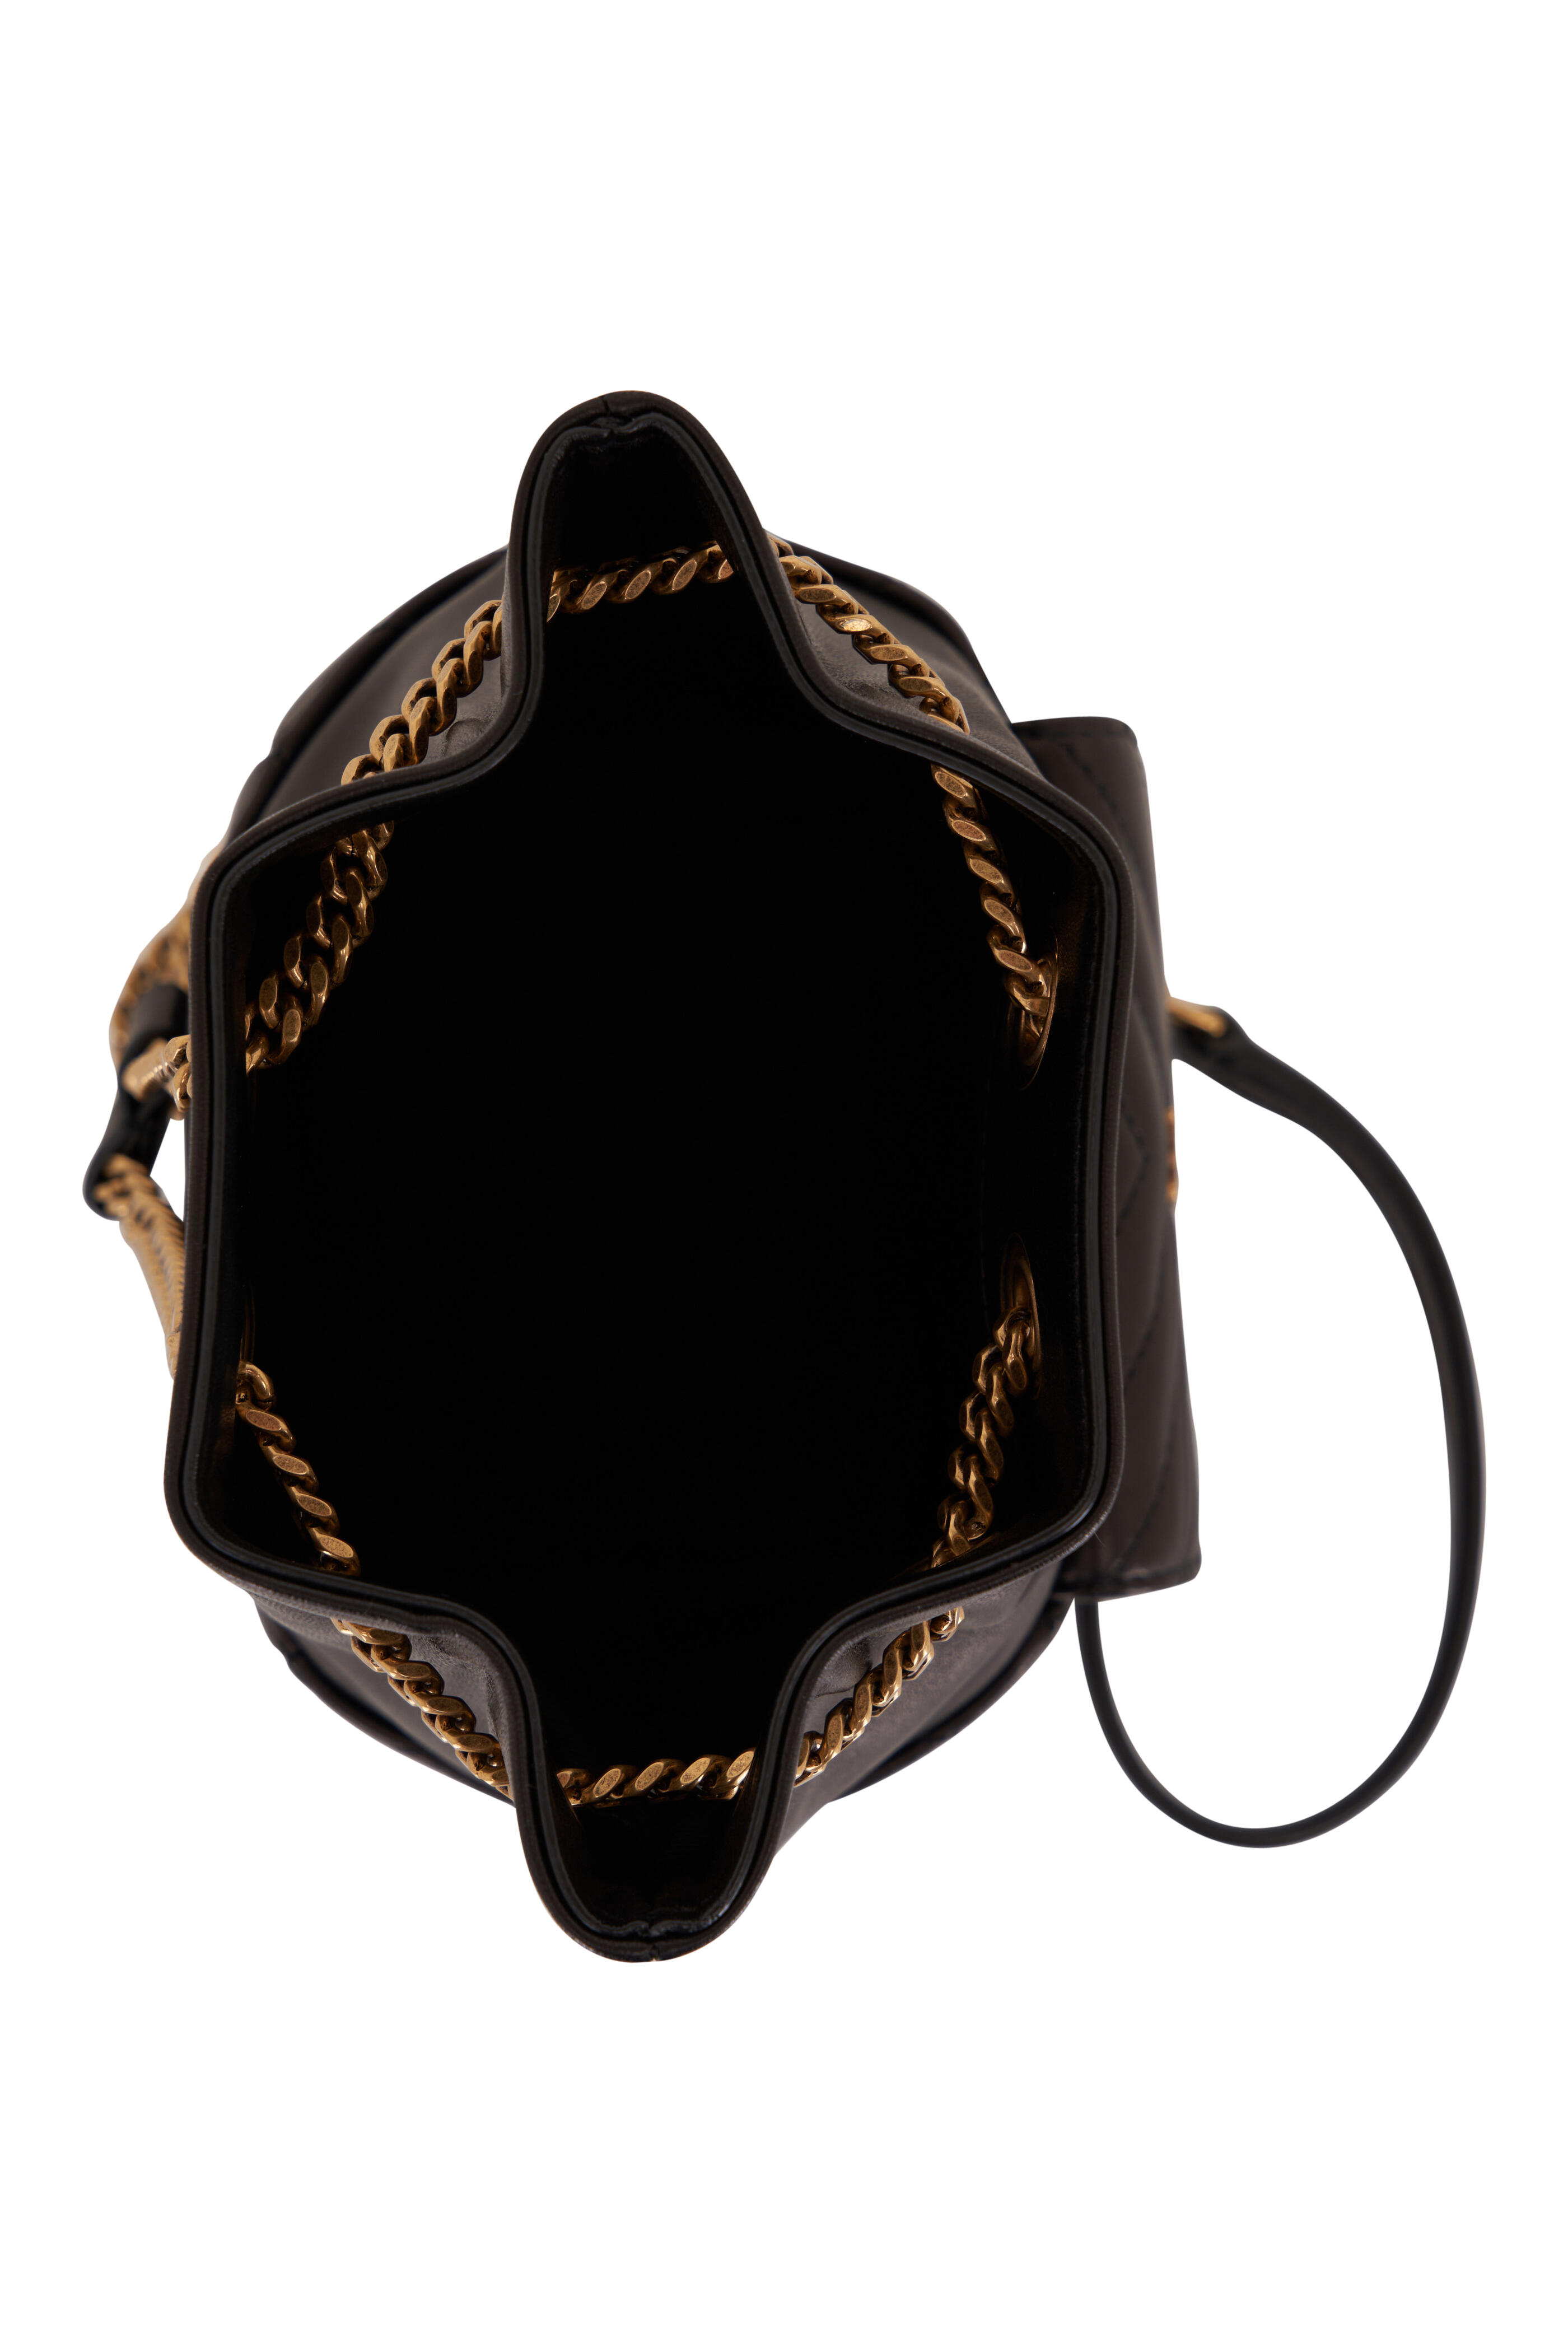 Saint Laurent Monogram Mini Leather Bucket Bag in Black